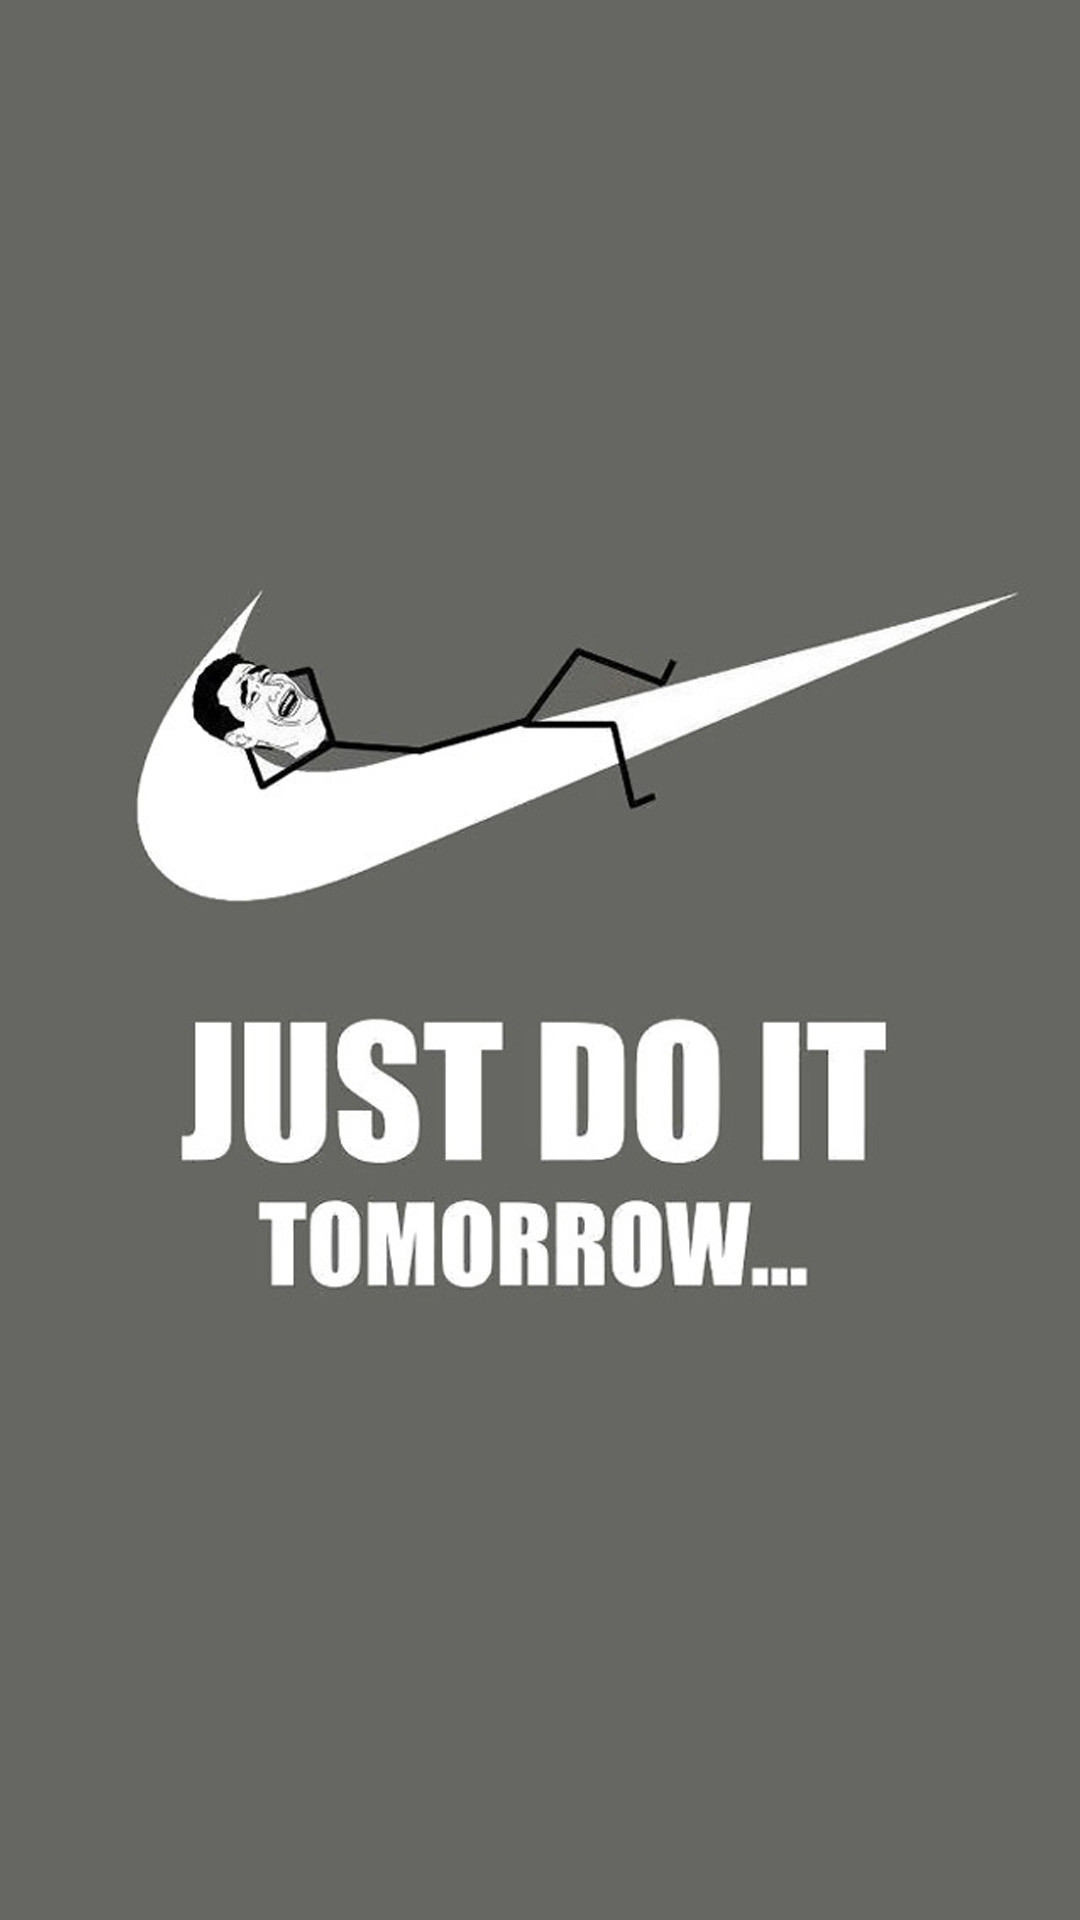 1080x1920 2940 5 Just Do It Tomorrow Iphone 5 Wallpaper Nike Just Do It